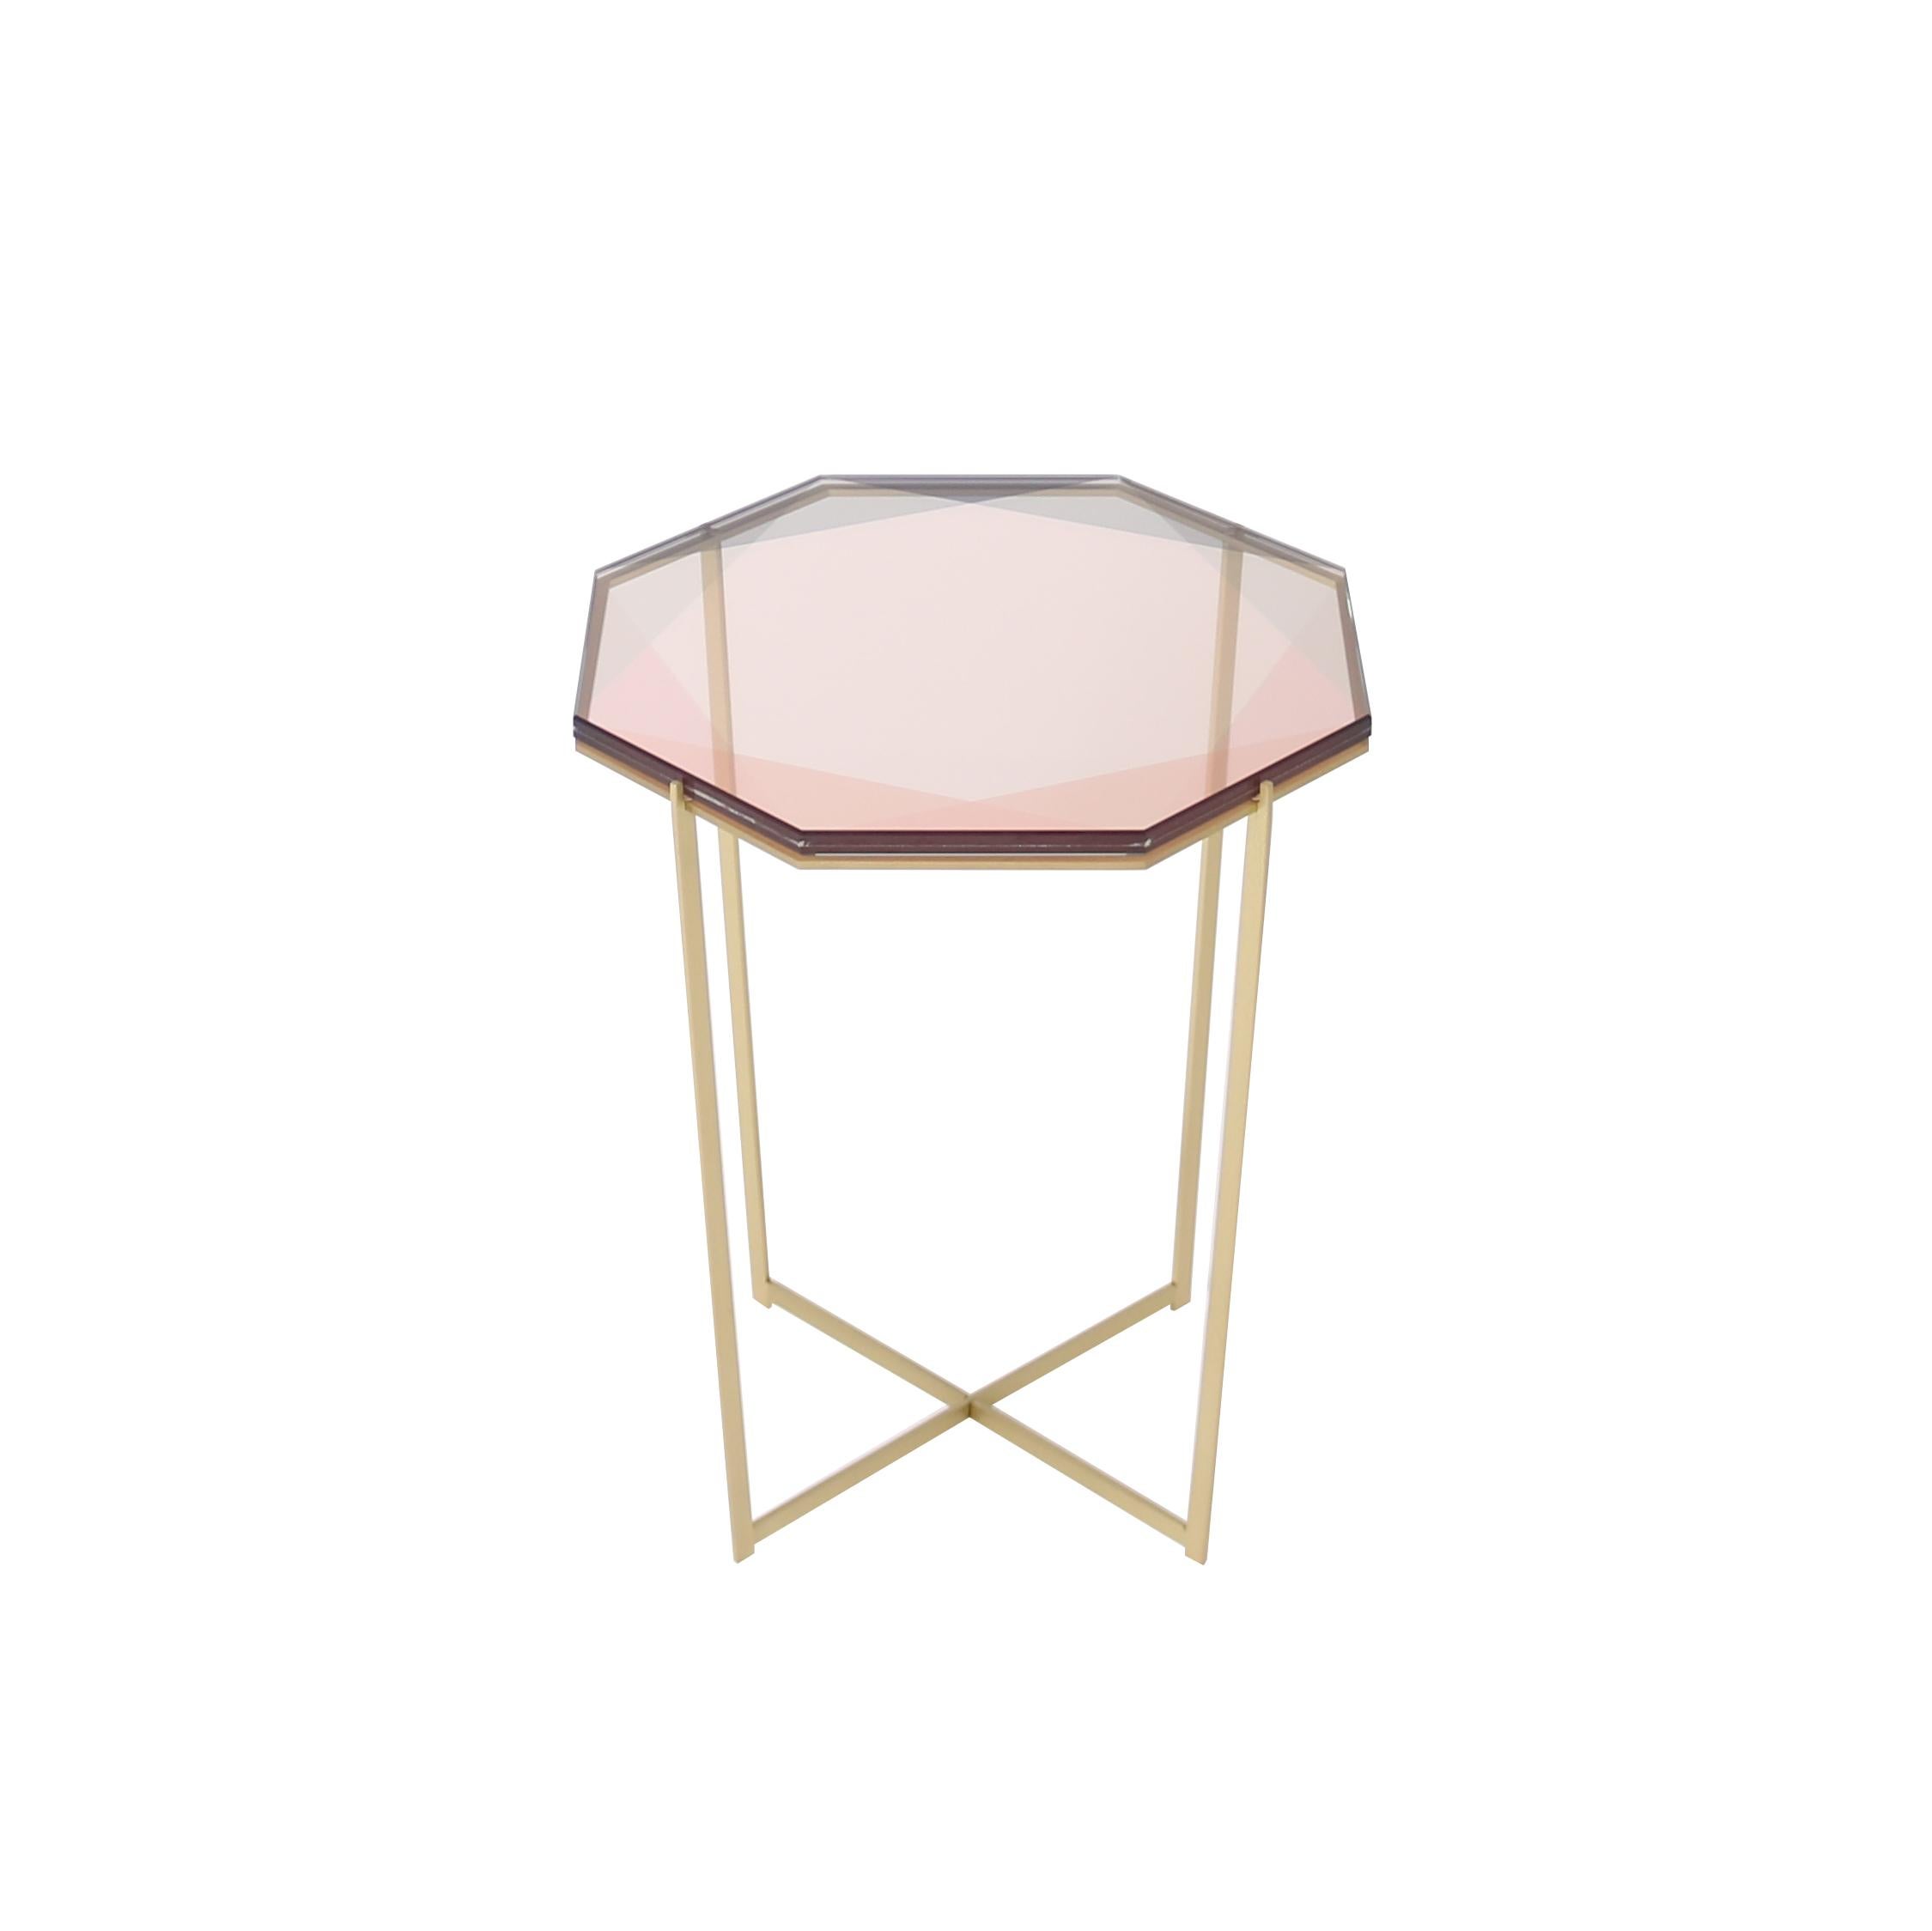 Gem Side Table - Blush Glass w/ Brass Base by Debra Folz